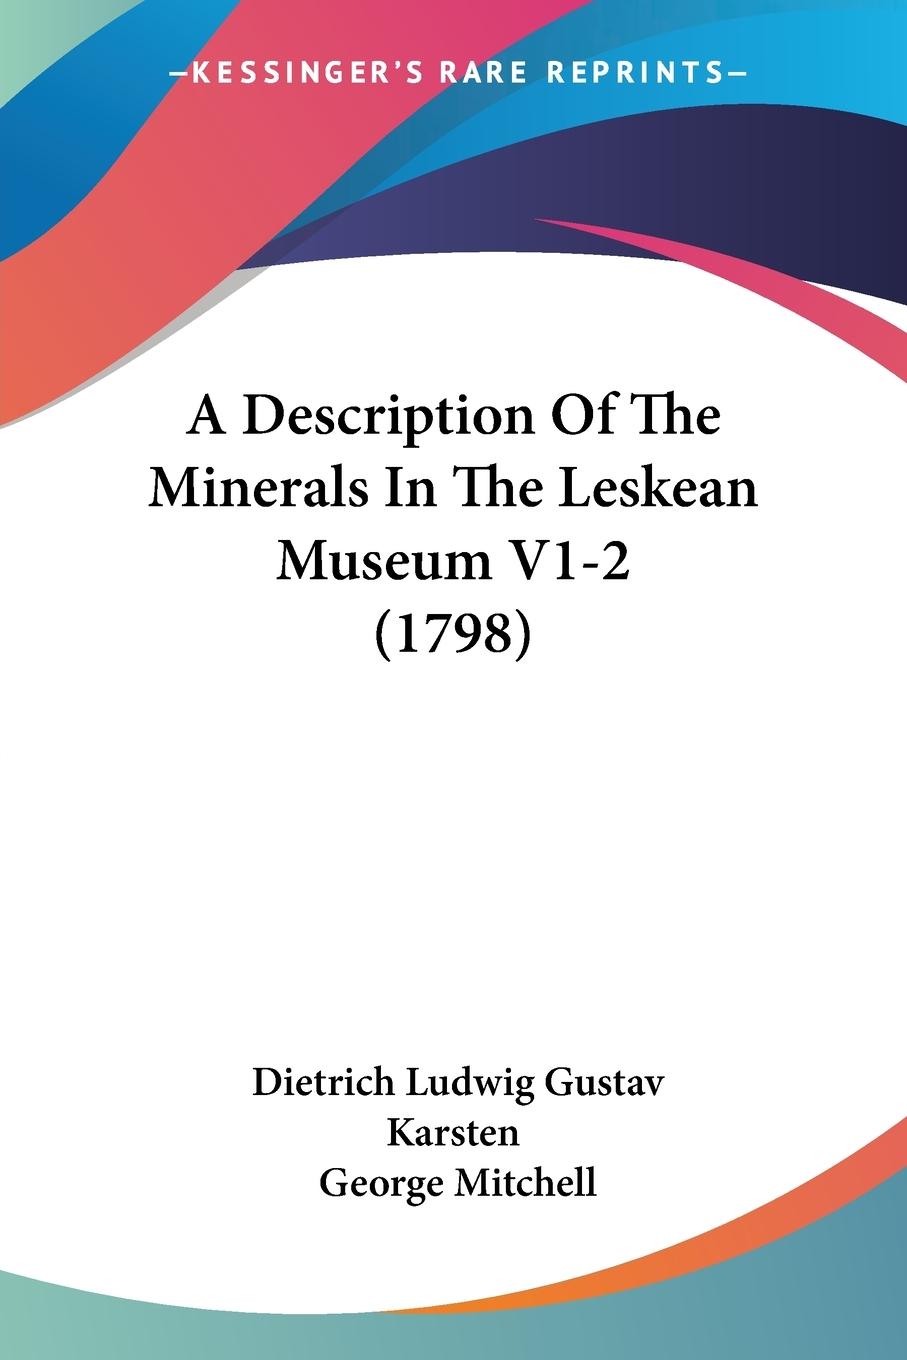 A Description Of The Minerals In The Leskean Museum V1-2 (1798) - Karsten, Dietrich Ludwig Gustav